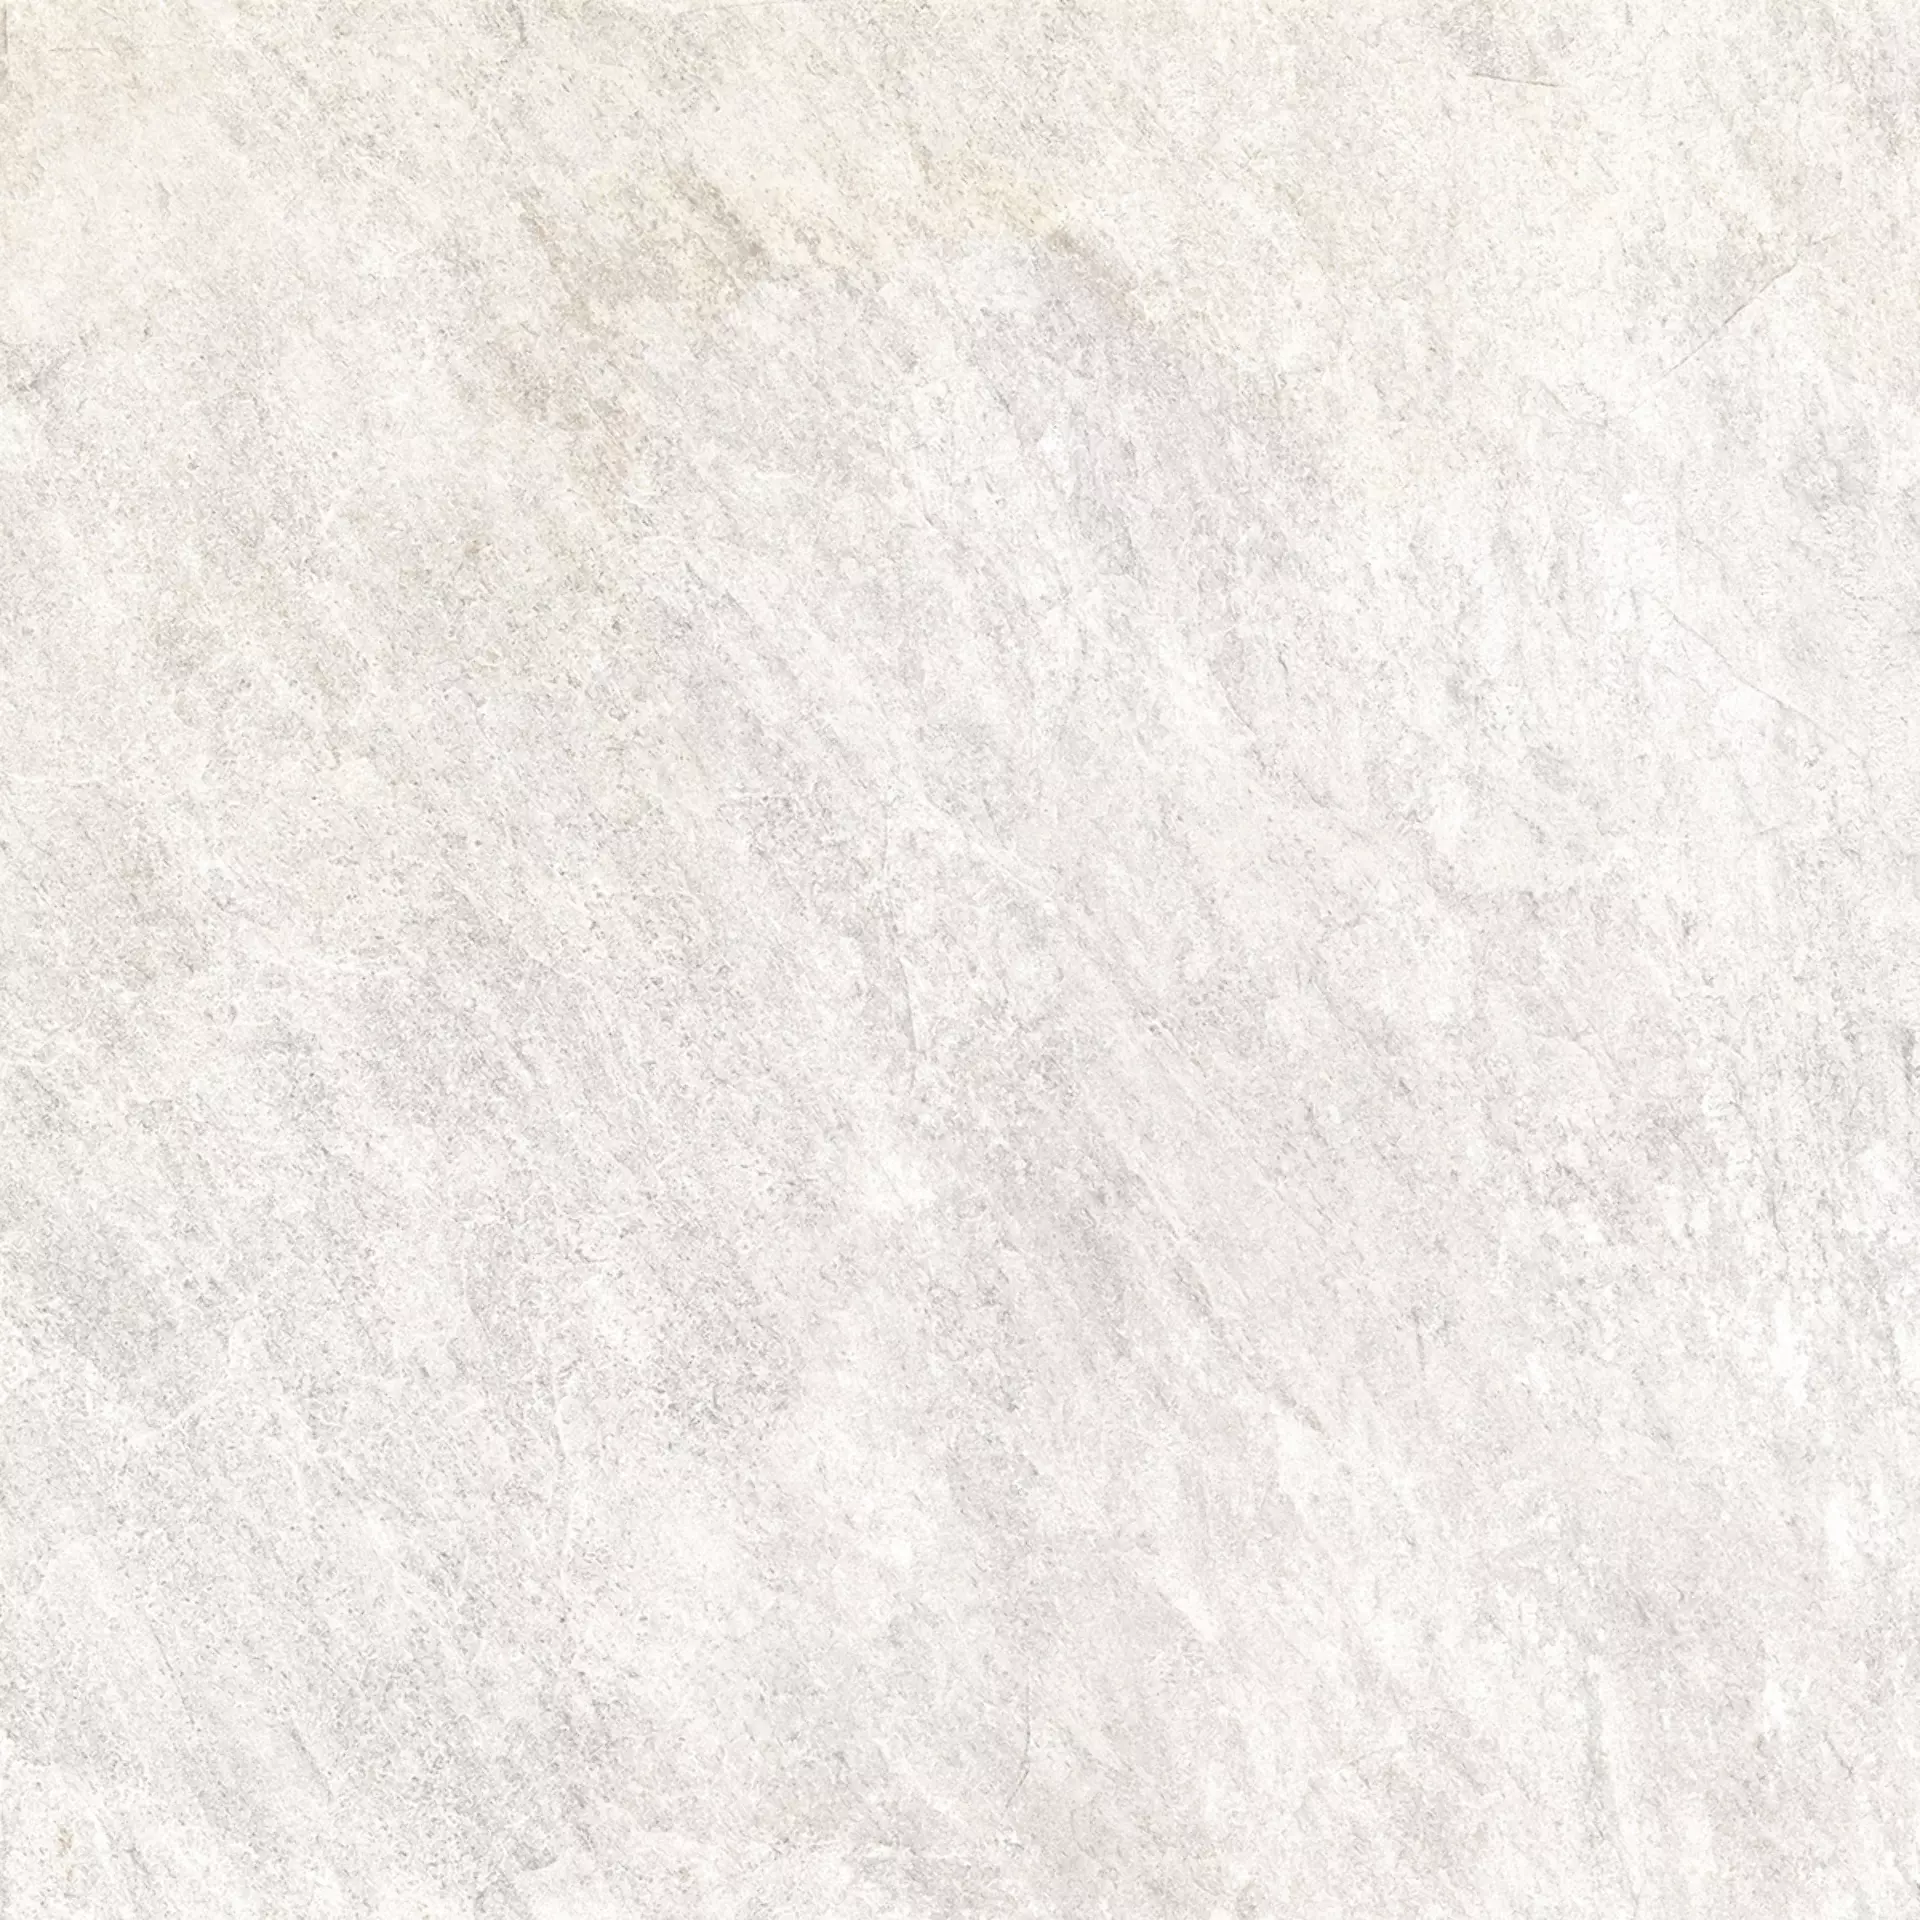 Rondine Quarzi White Naturale J87293 60x60cm rectified 9,5mm